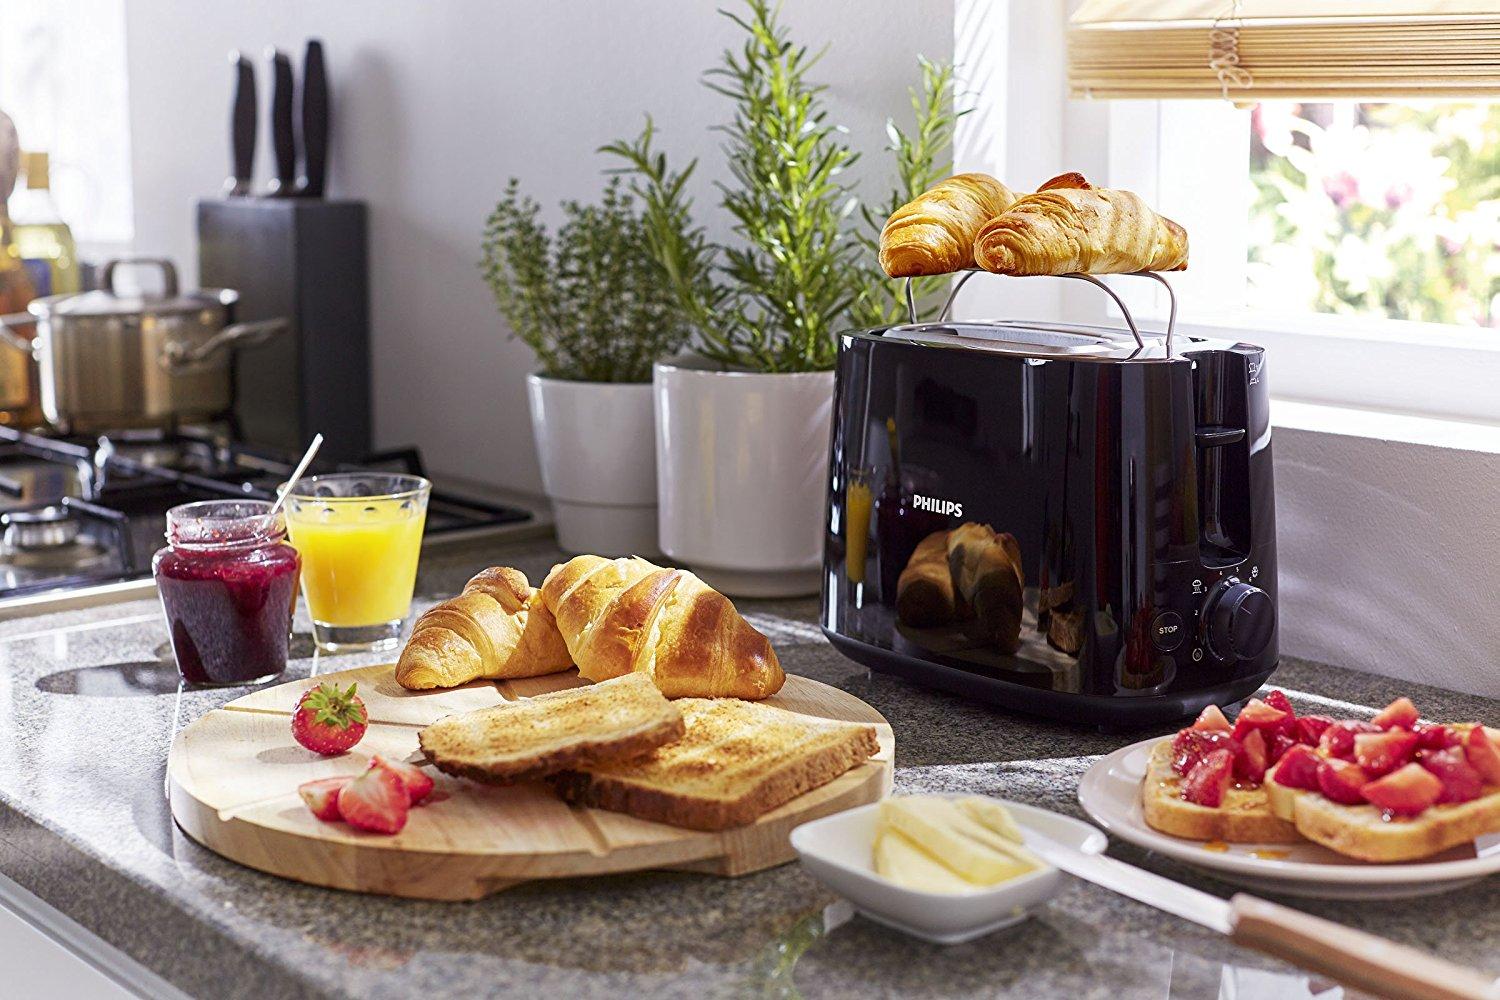 Philips тостер и чайник  скидки до 58% из магазина Amazon (Германия)